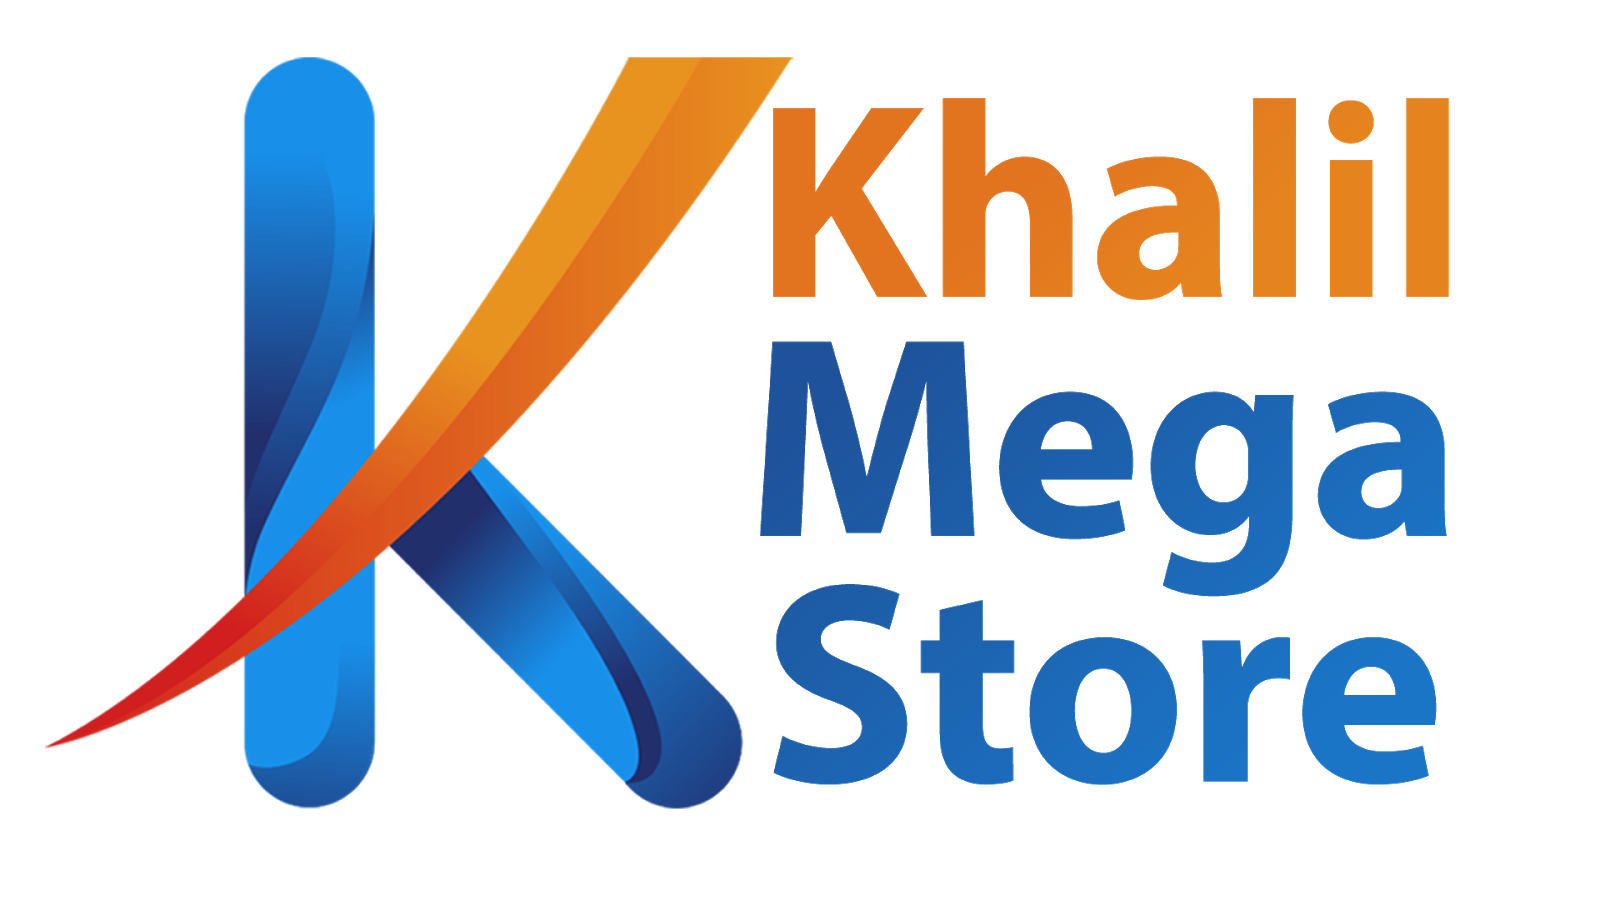 Khalil Mega Store